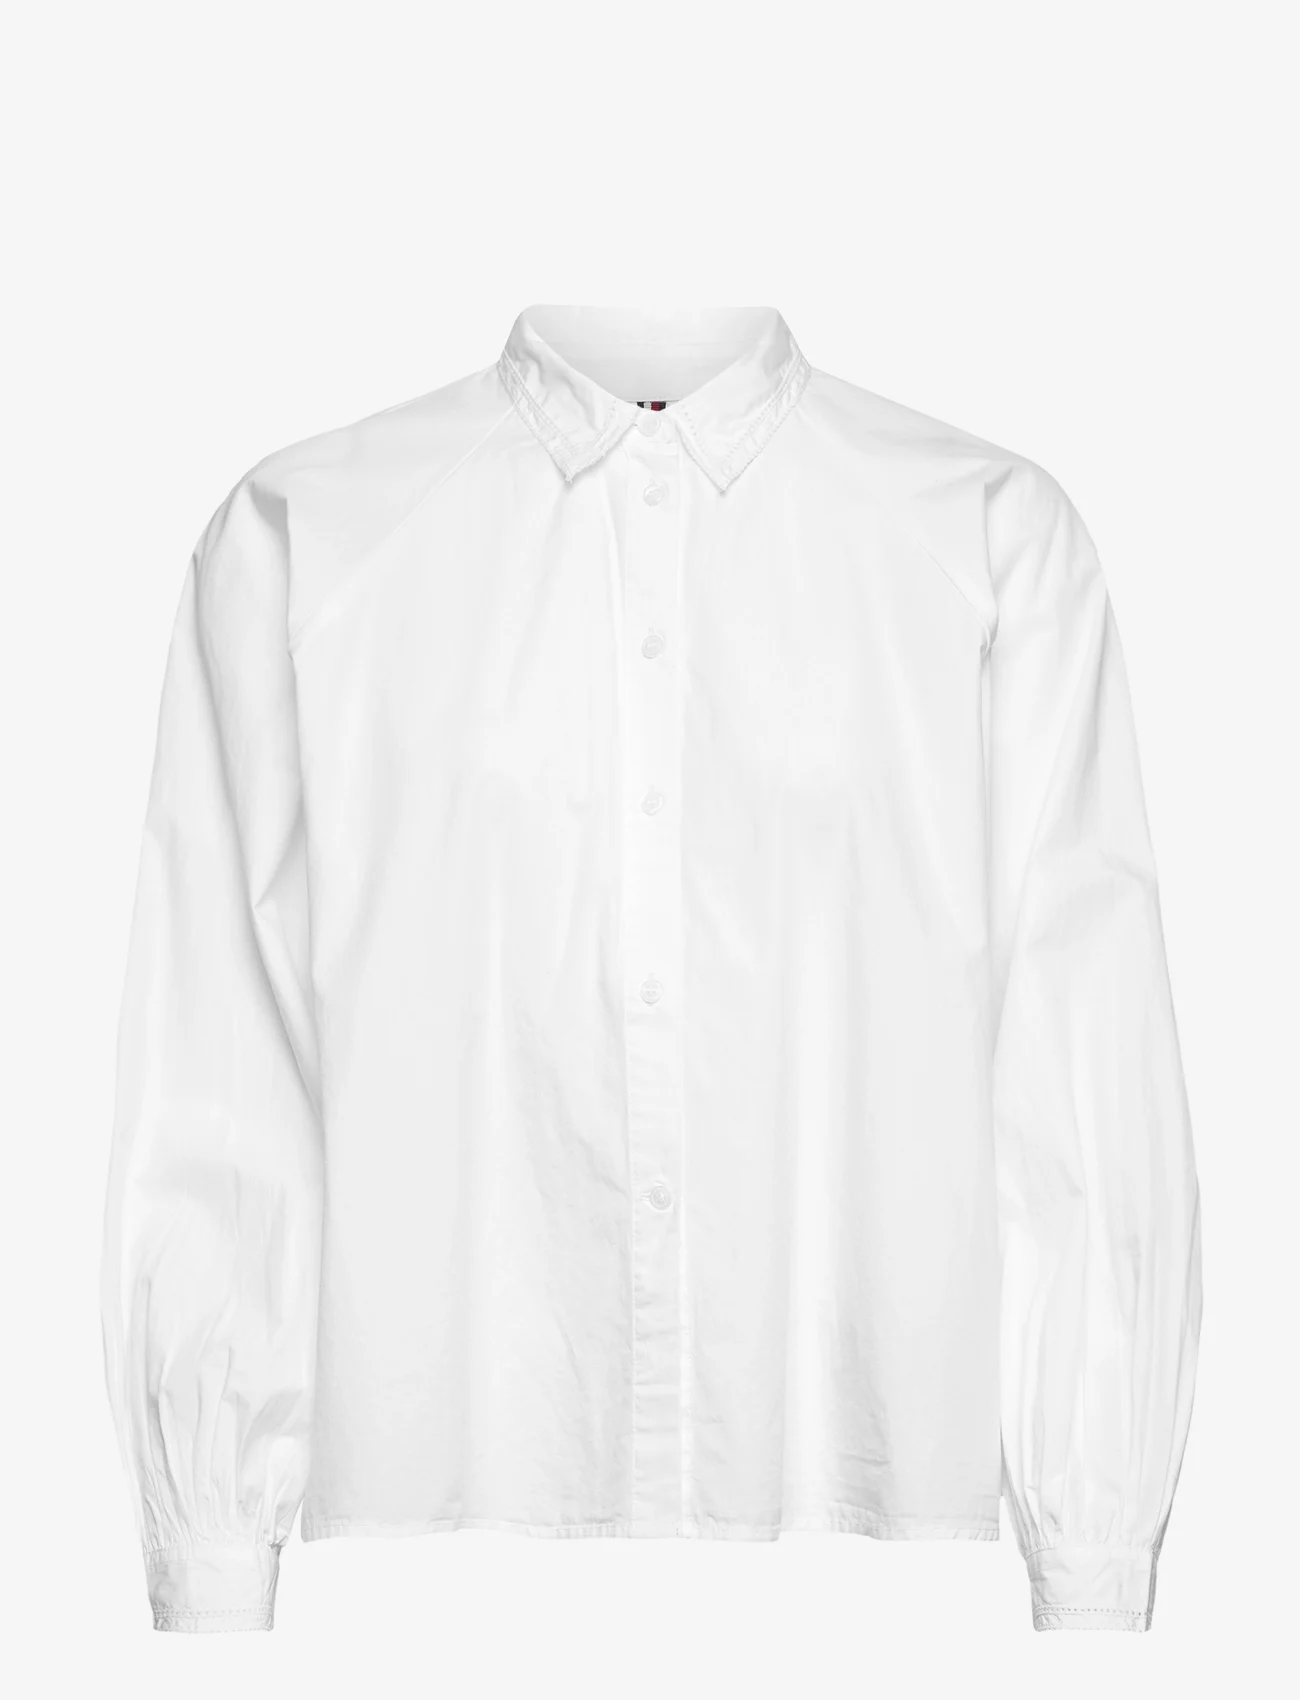 Tommy Hilfiger - ORG CO SOLID RAGLAN SHIRT LS - long-sleeved shirts - th optic white - 0